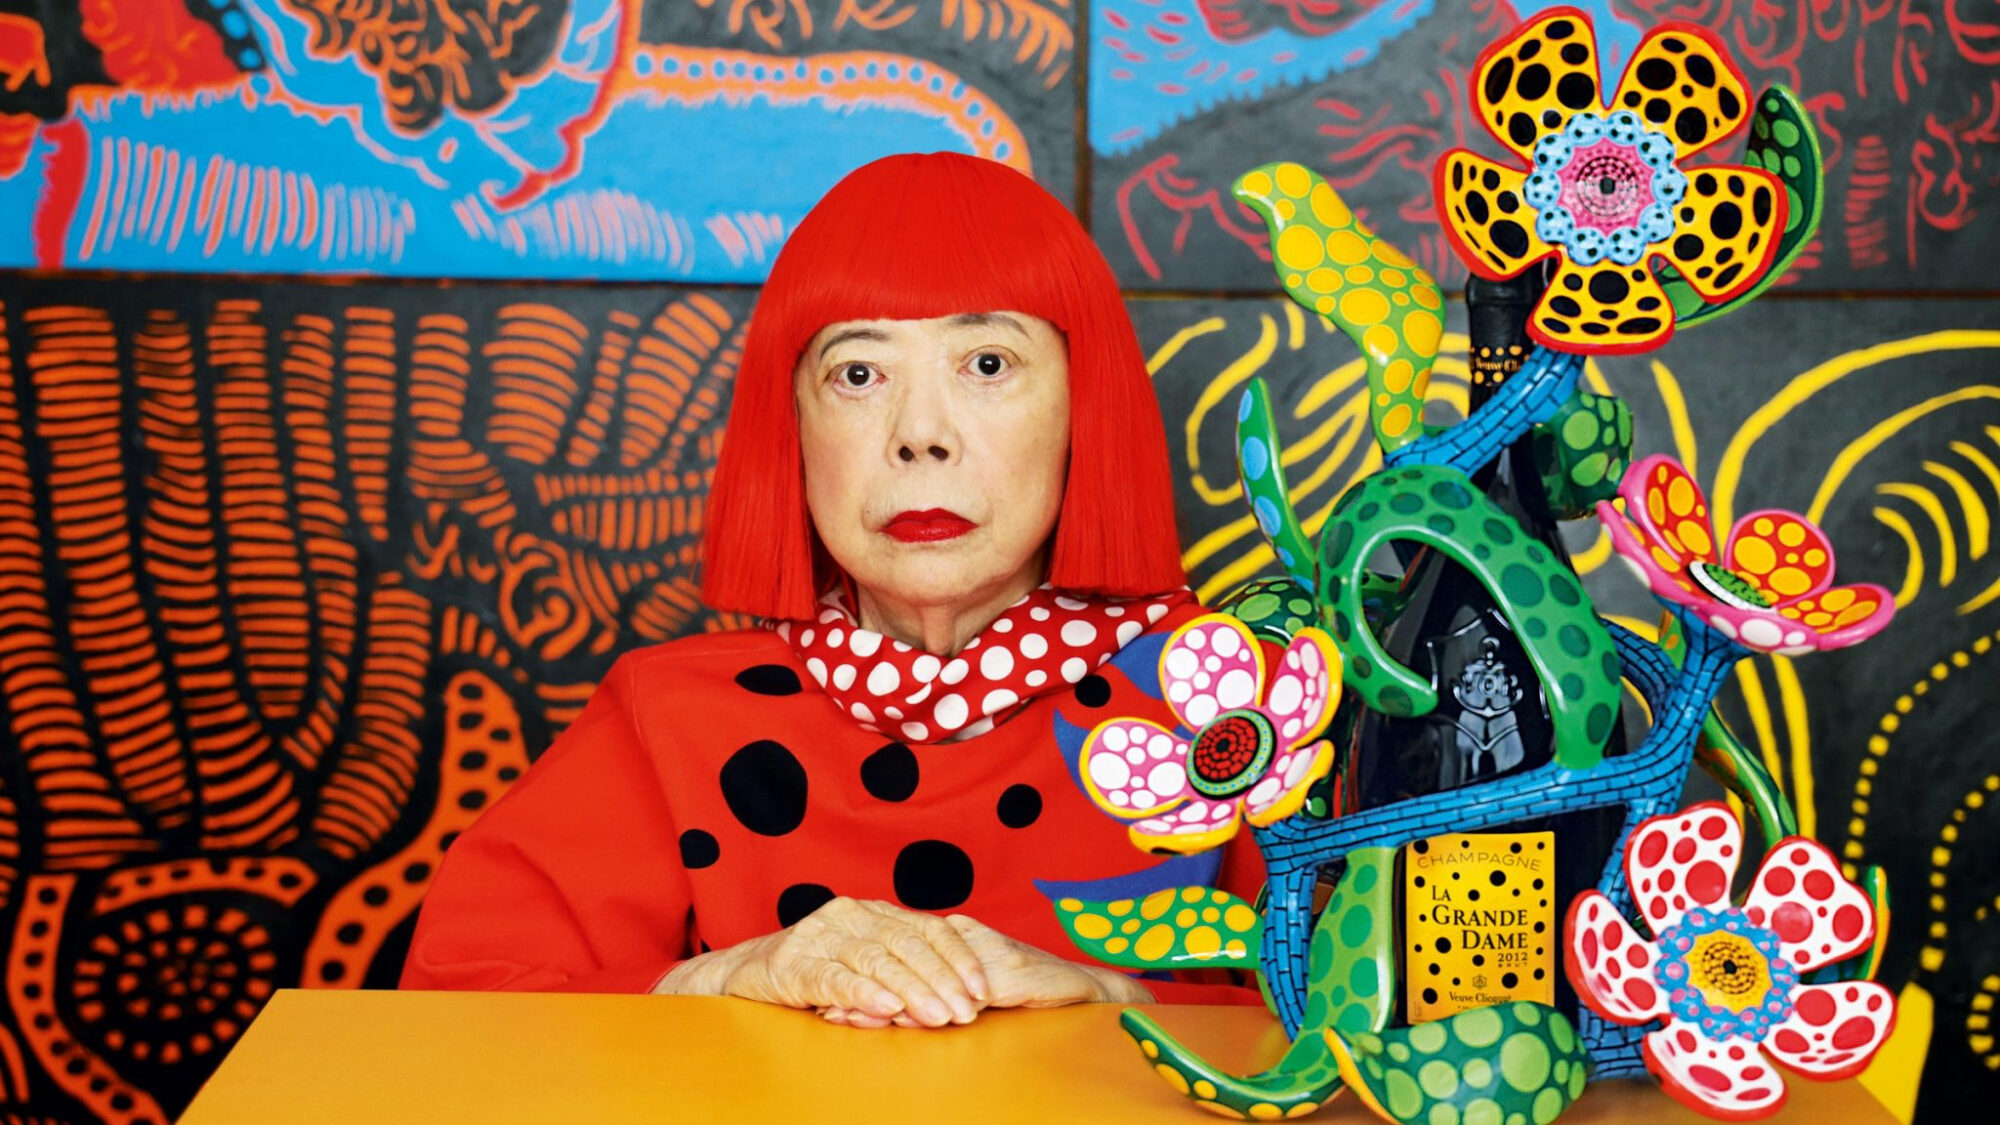 Above: Japanese Artist and Writer Yayoi Kusama